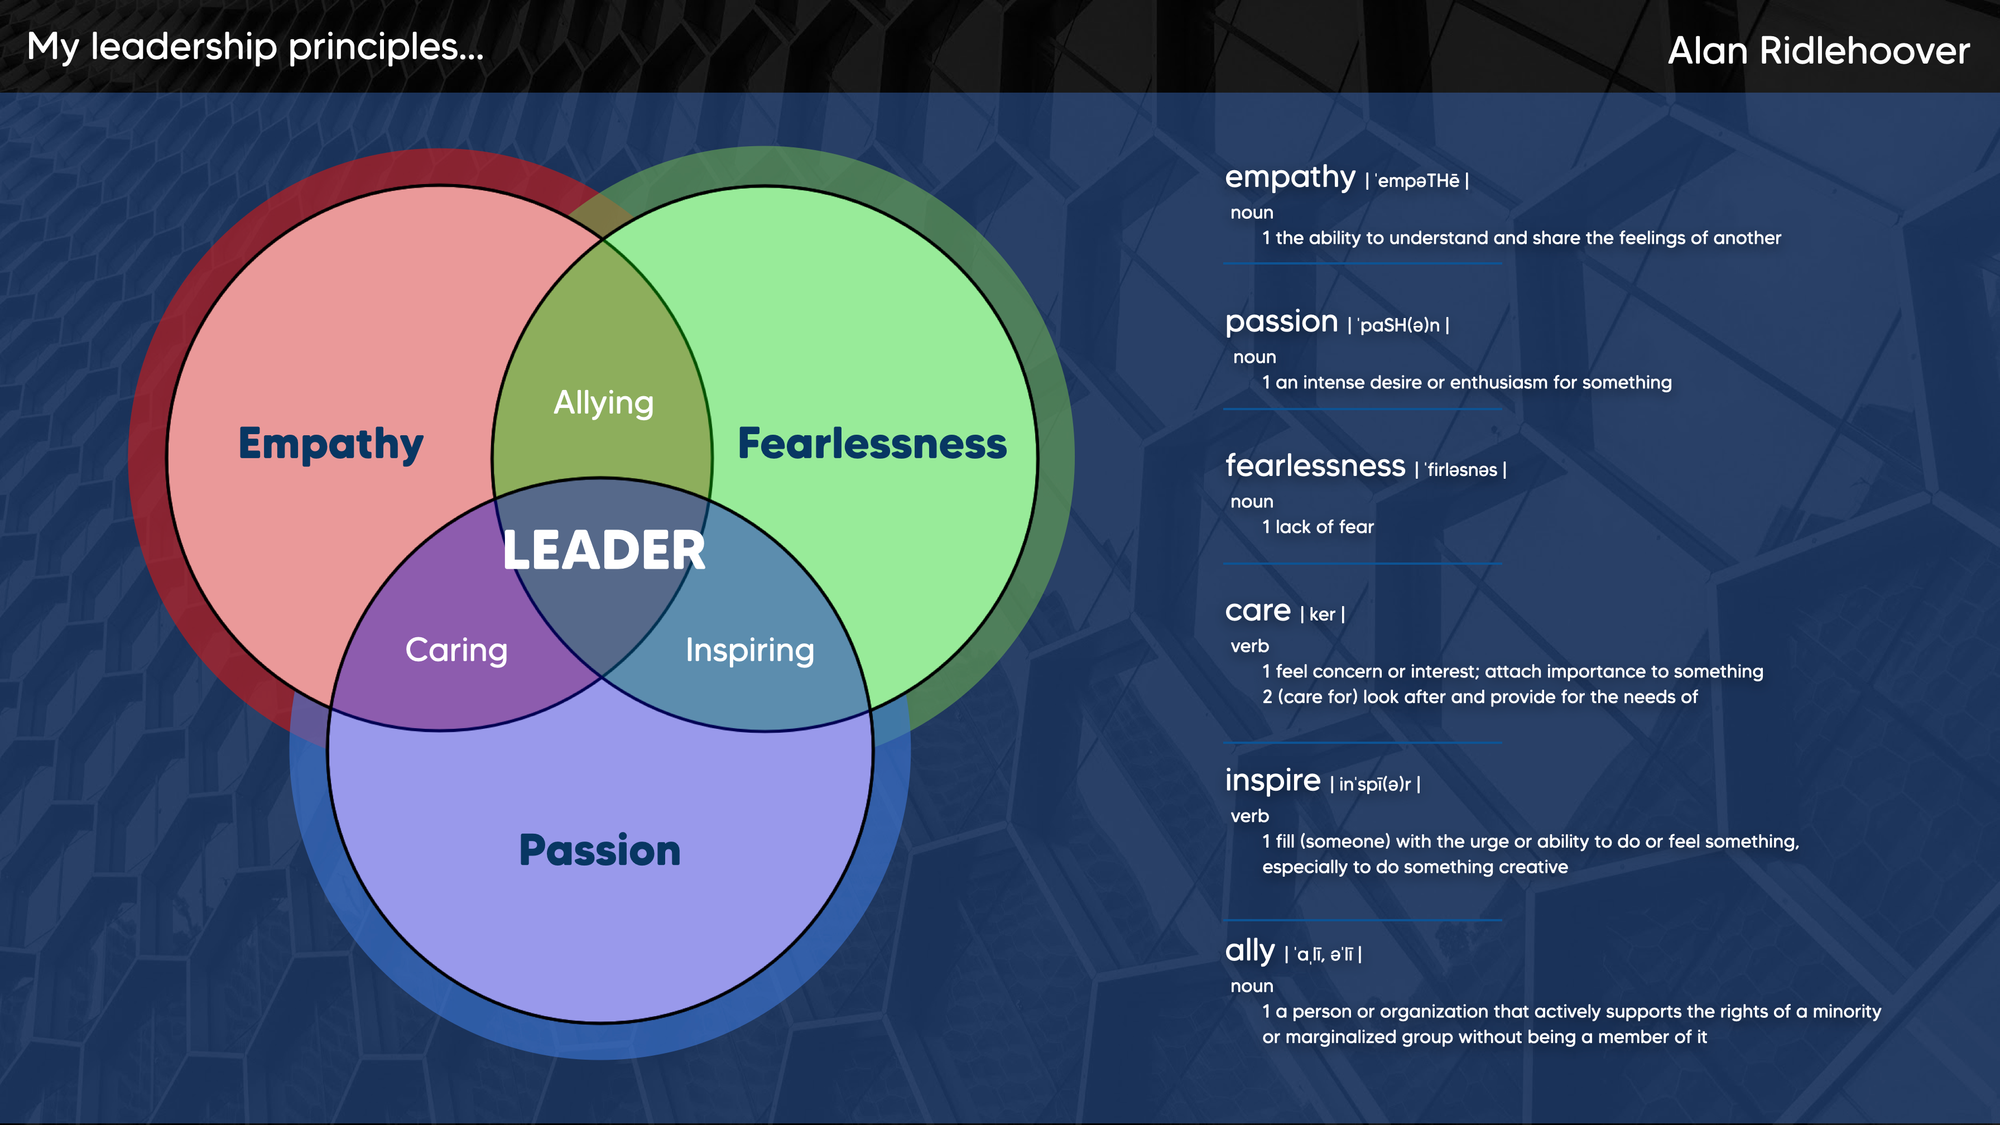 Alan Ridlehoover's Leadership Deck - My Leadership Principles slide with Venn diagram of how my principles interact